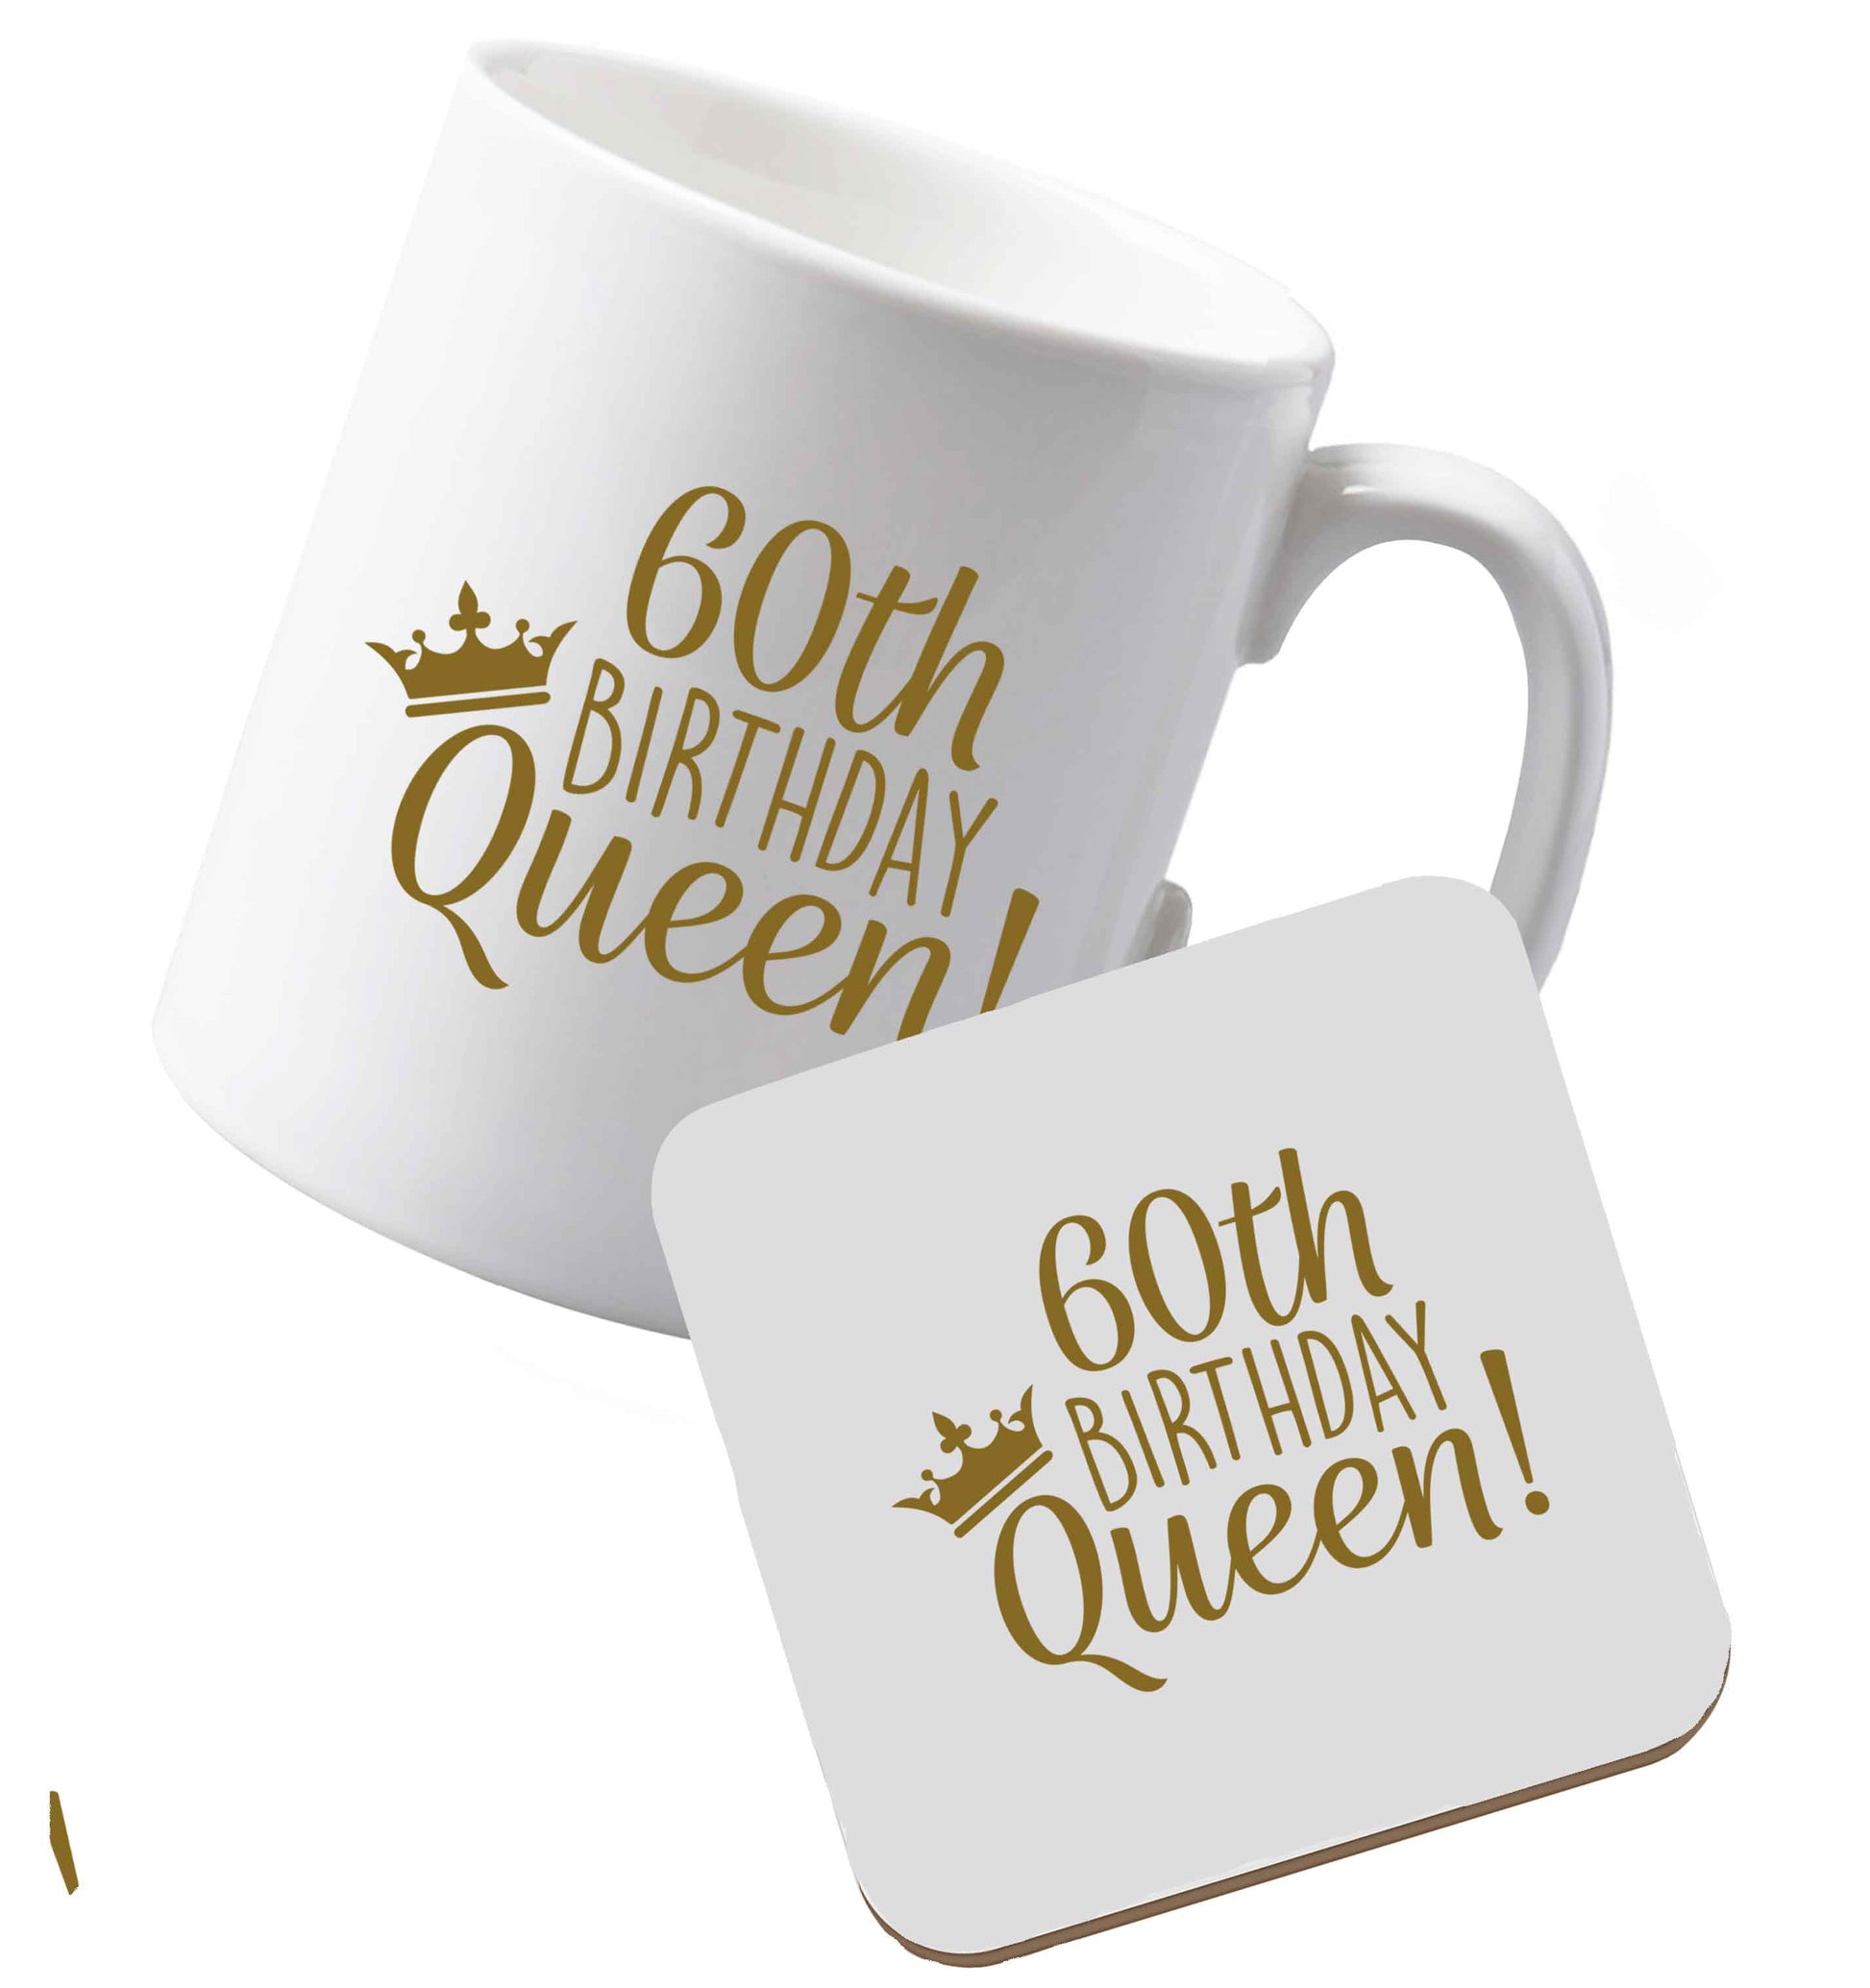 10 oz Ceramic mug and coaster 60th birthday Queen both sides